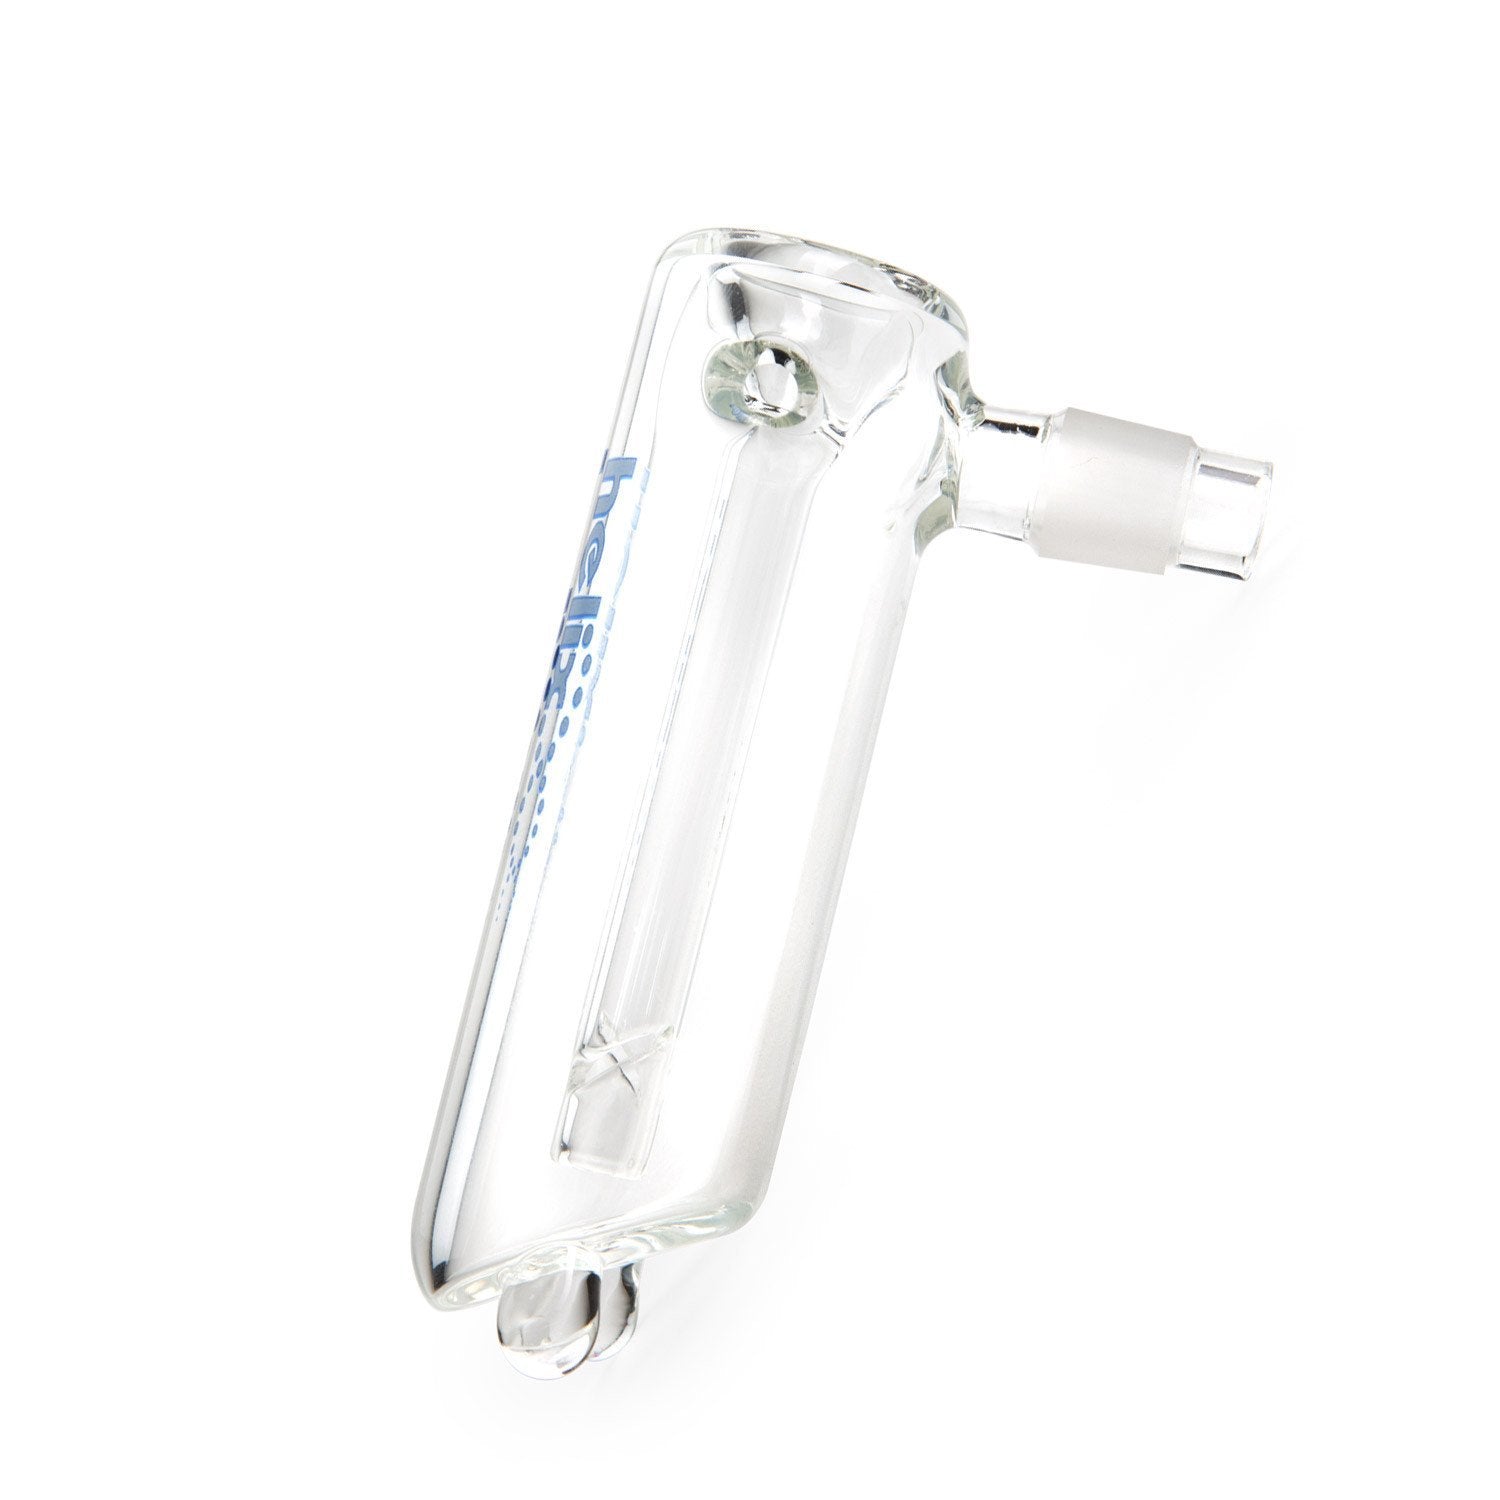 GRAV Helix Multi 14mm Bubbler Attachment | Replacement Parts & Accessories | 420 Science